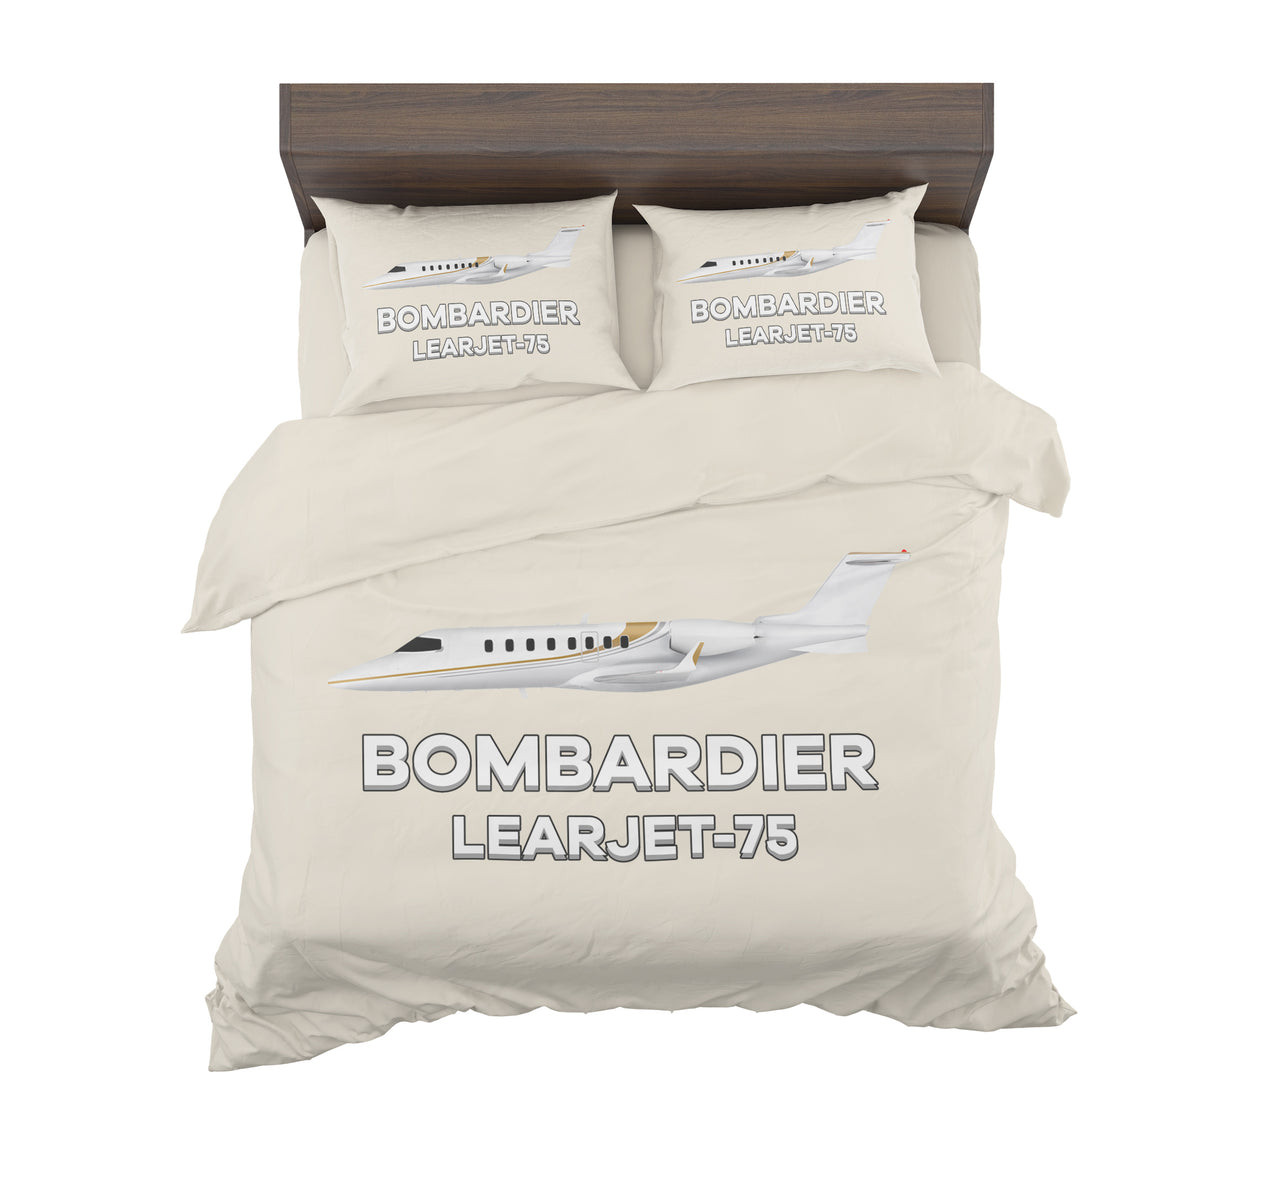 The Bombardier Learjet 75 Designed Bedding Sets